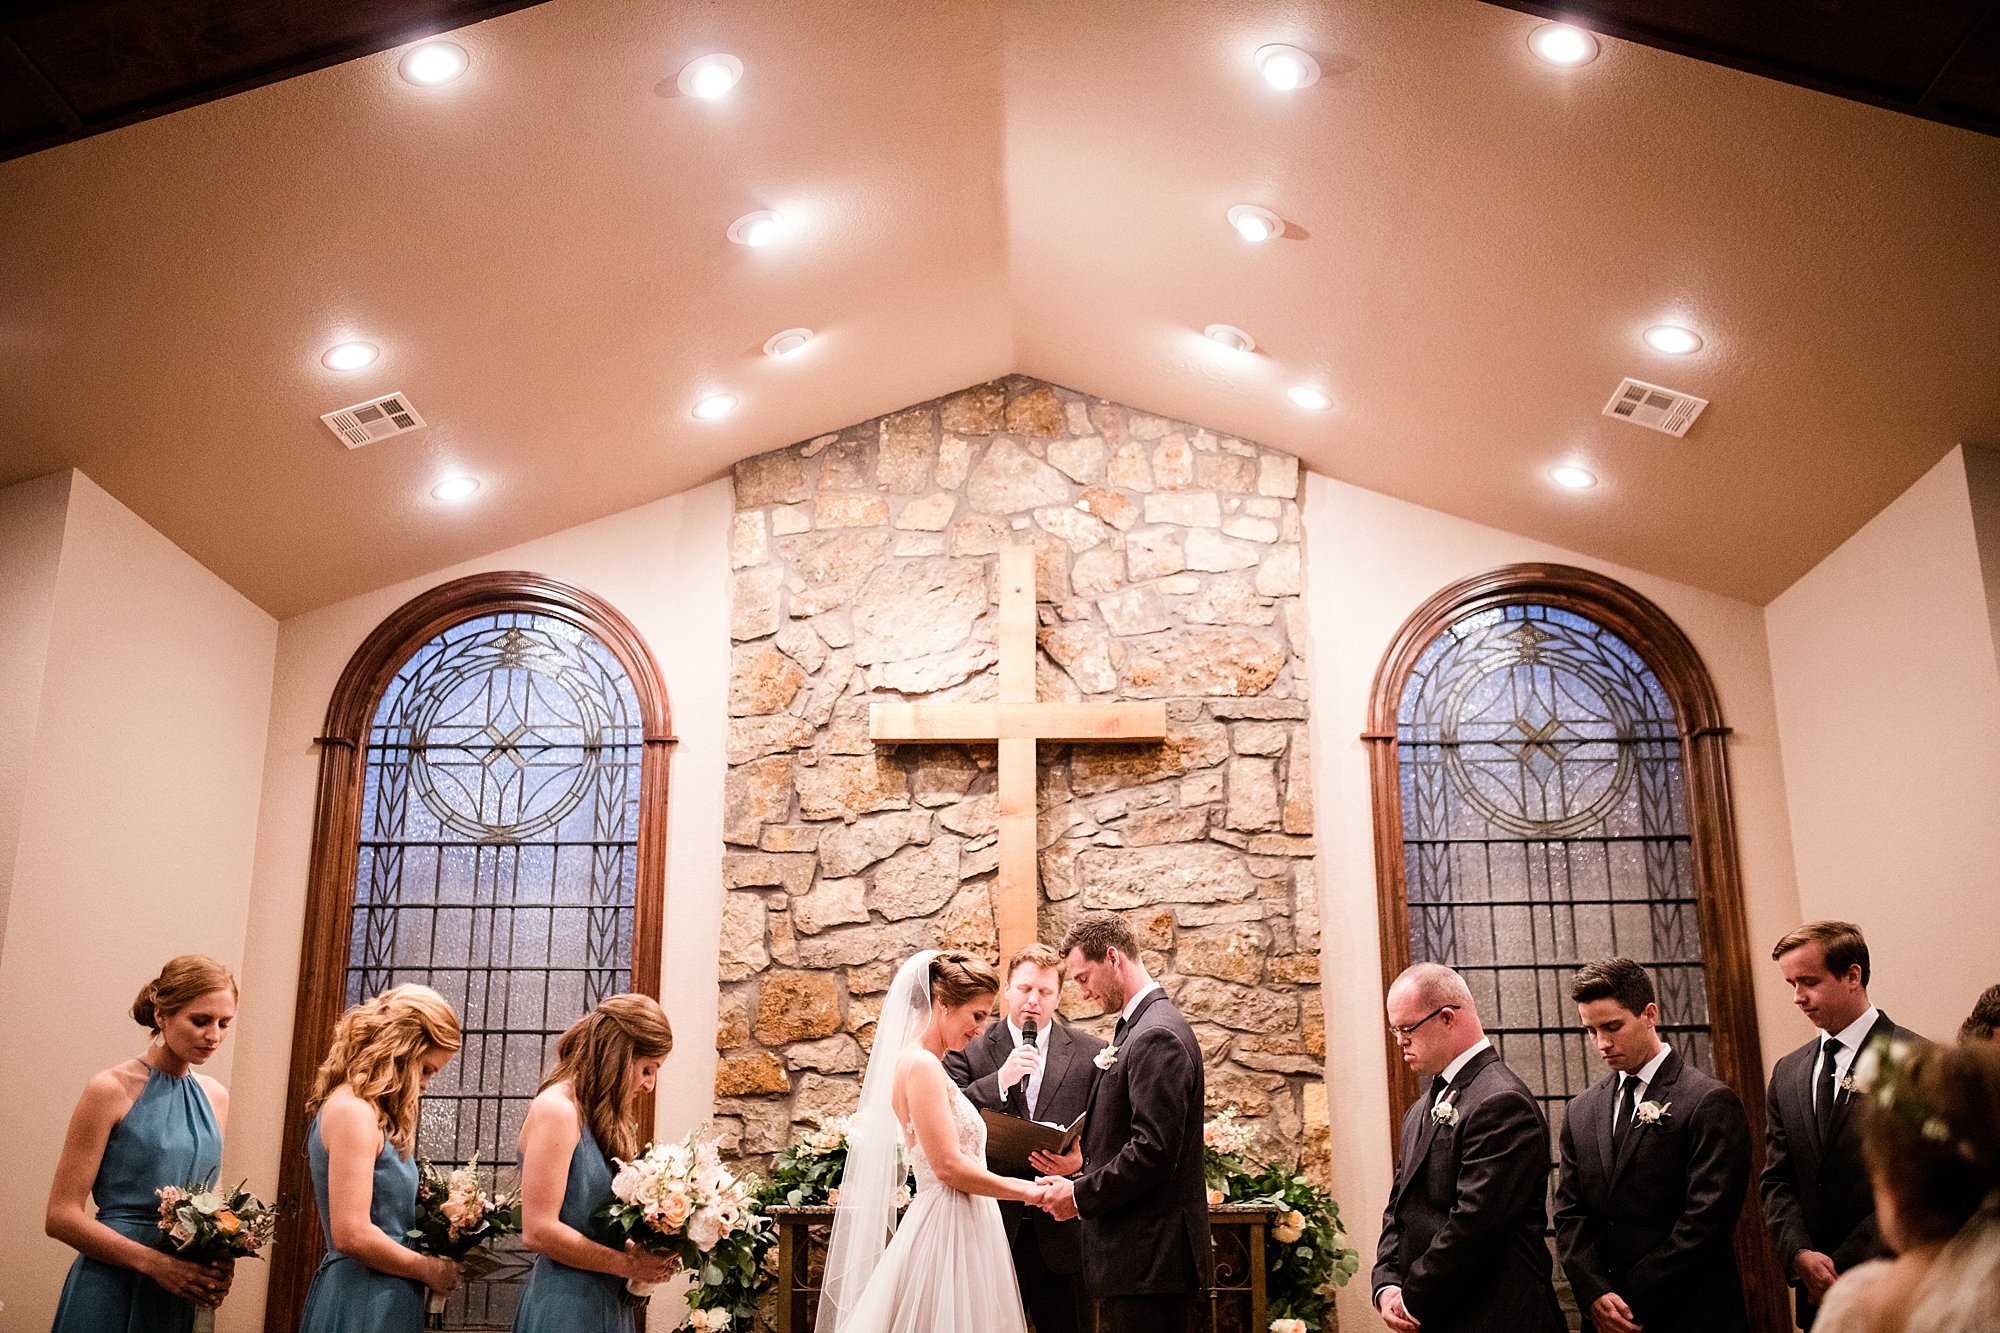 Fayetteville Wedding Photographer, Stone Chapel at Matt Lane Farm Wedding, Rainy Wedding Day Photos